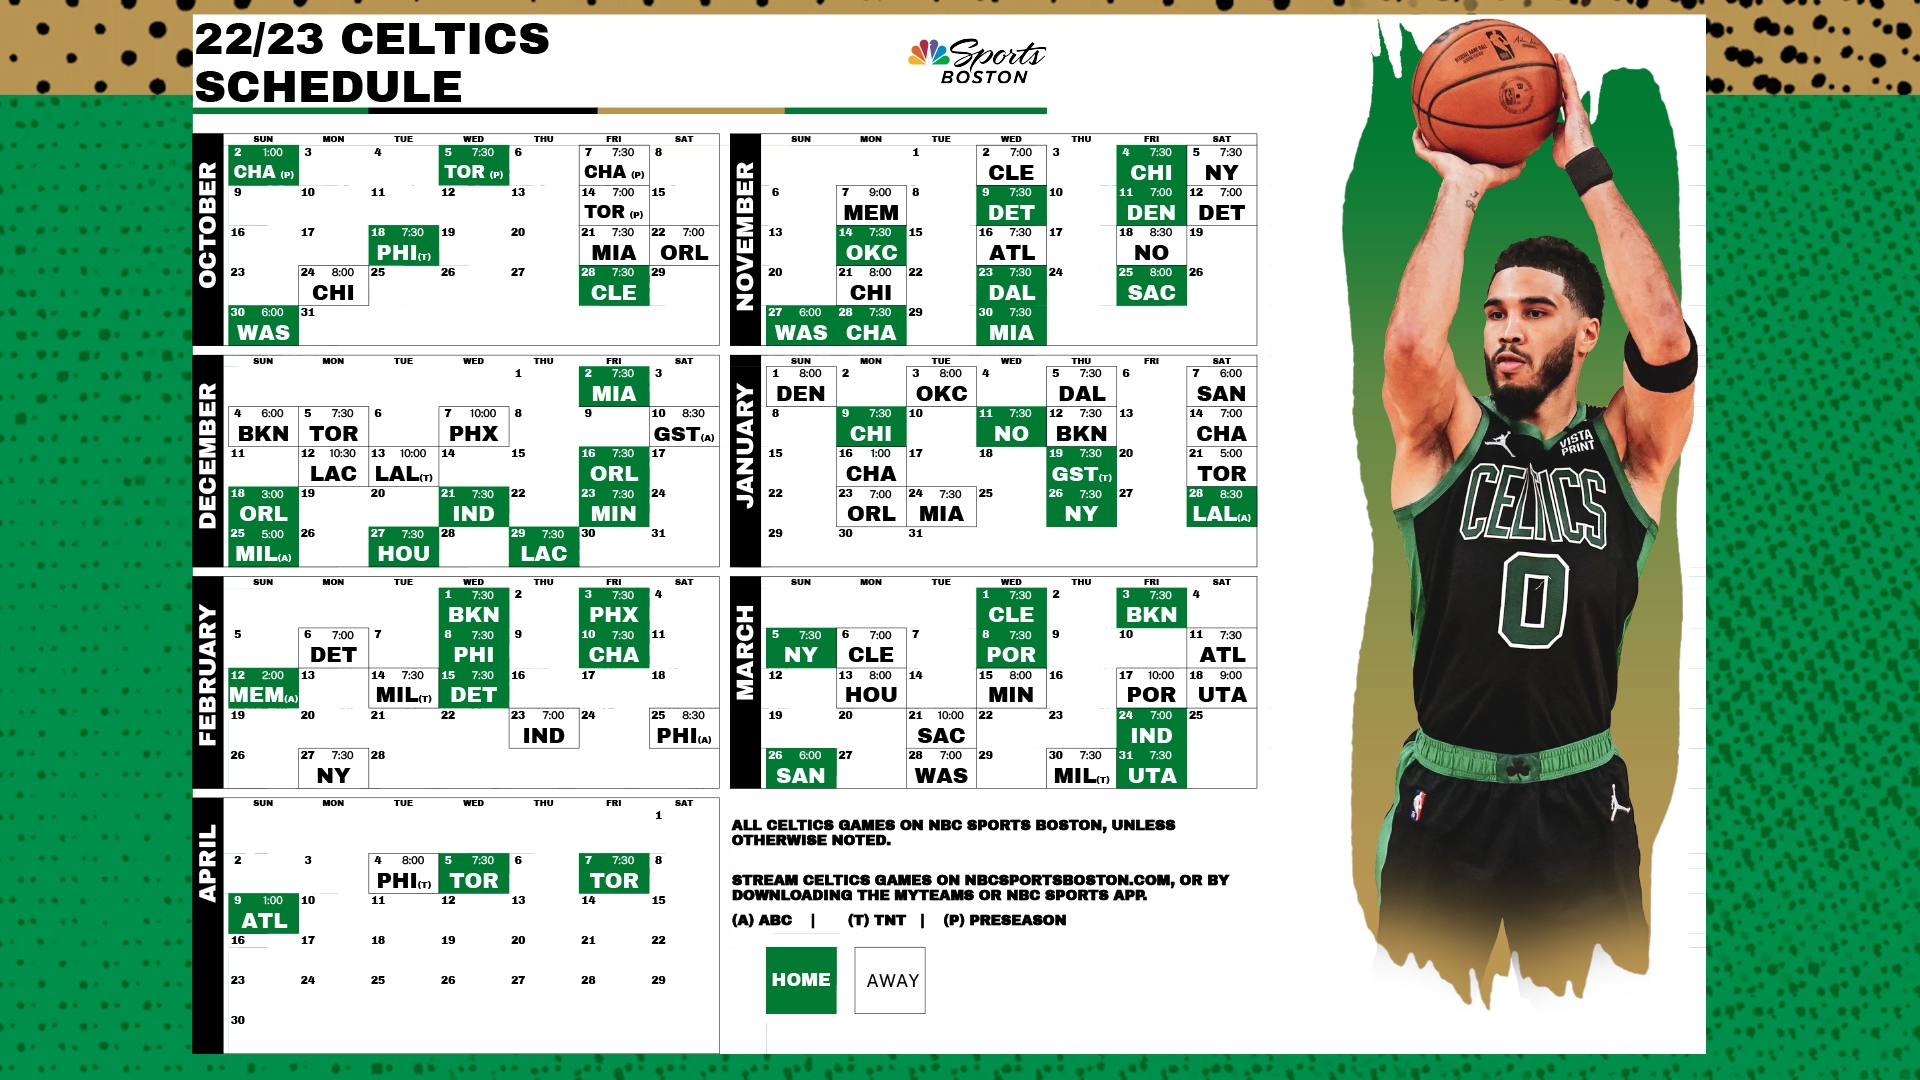 Celtics schedule